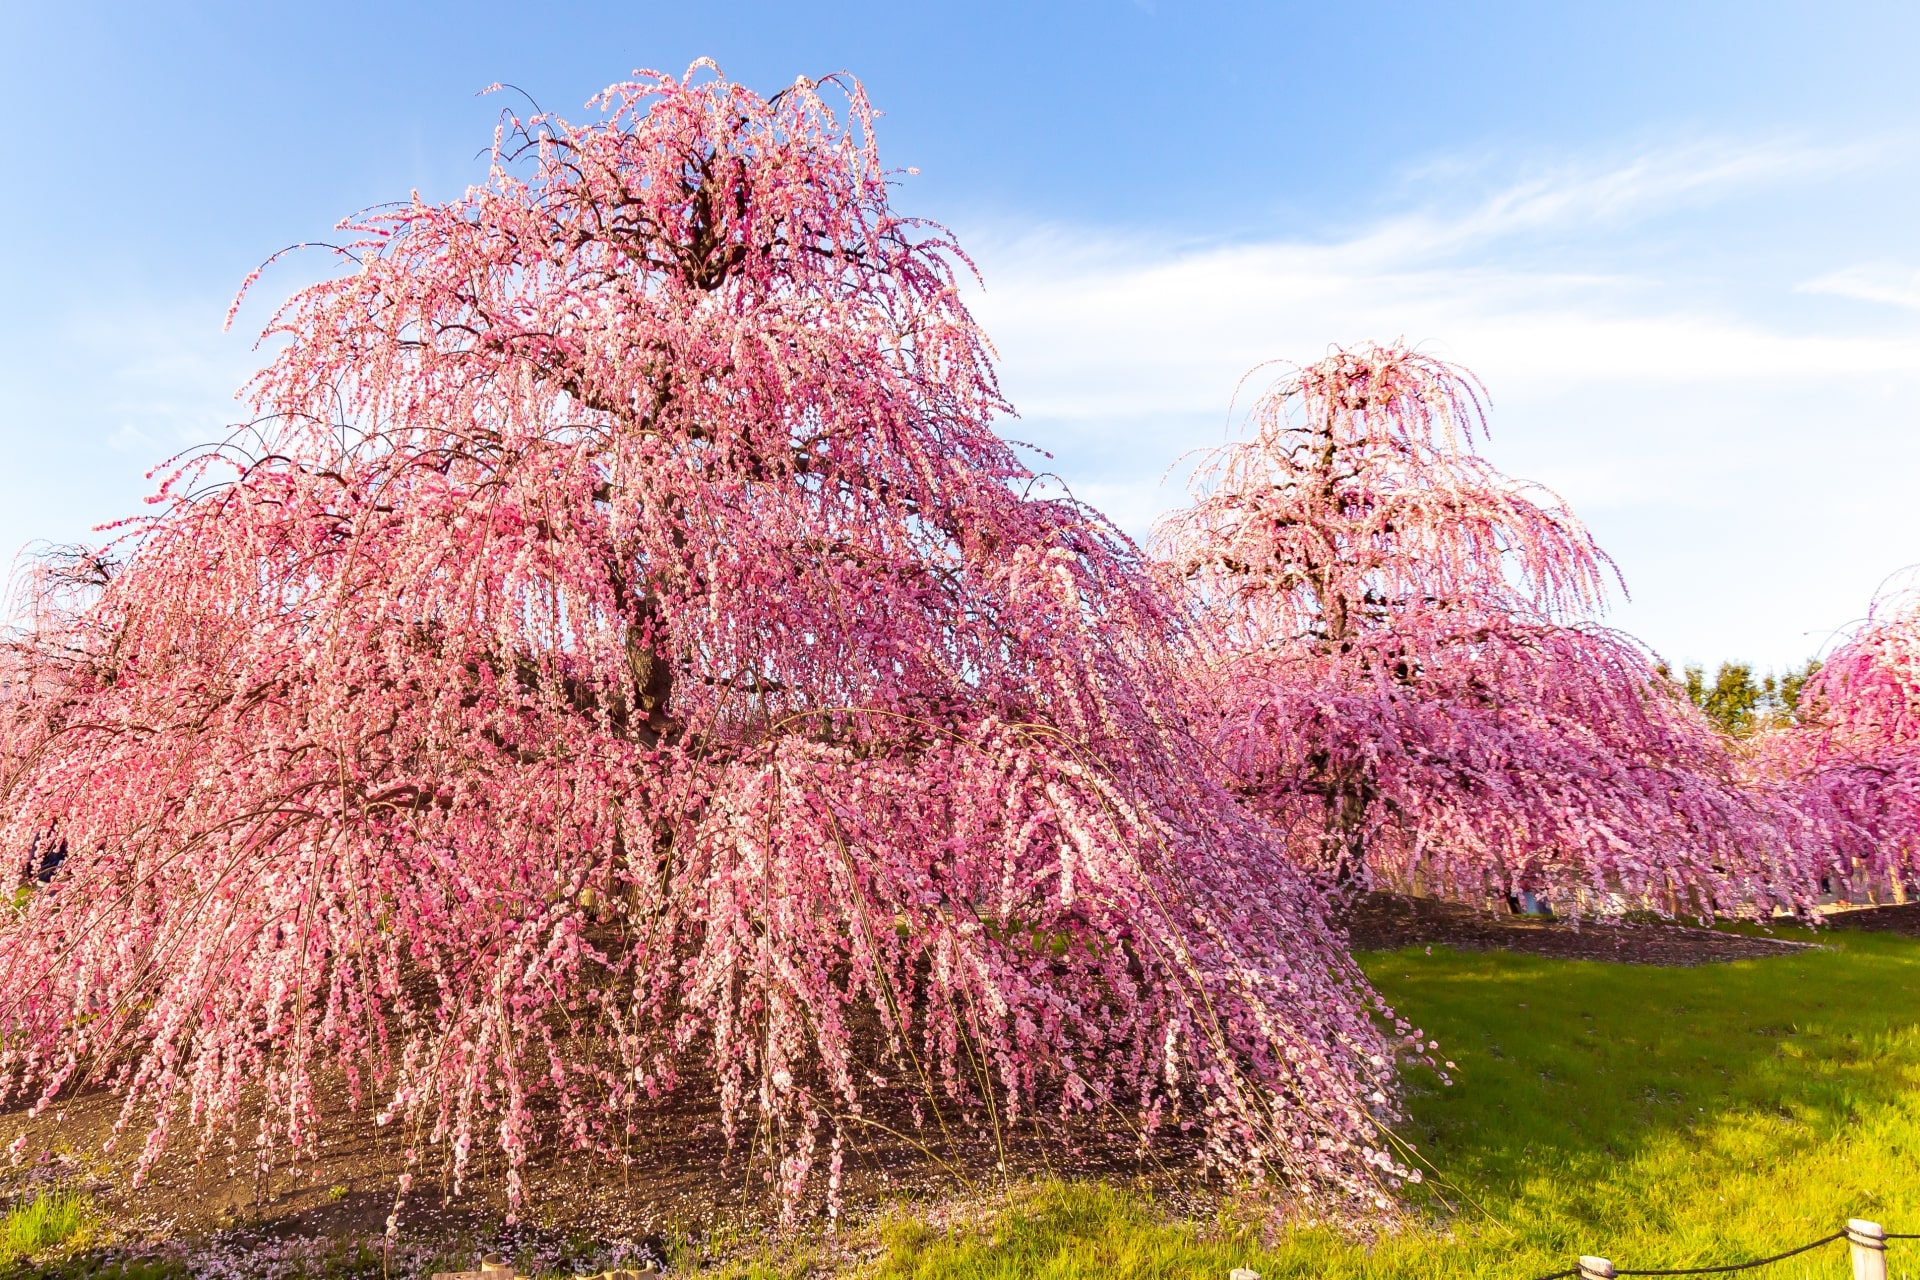 Suzuka Forest Garden Plum Blossom Festival 2022